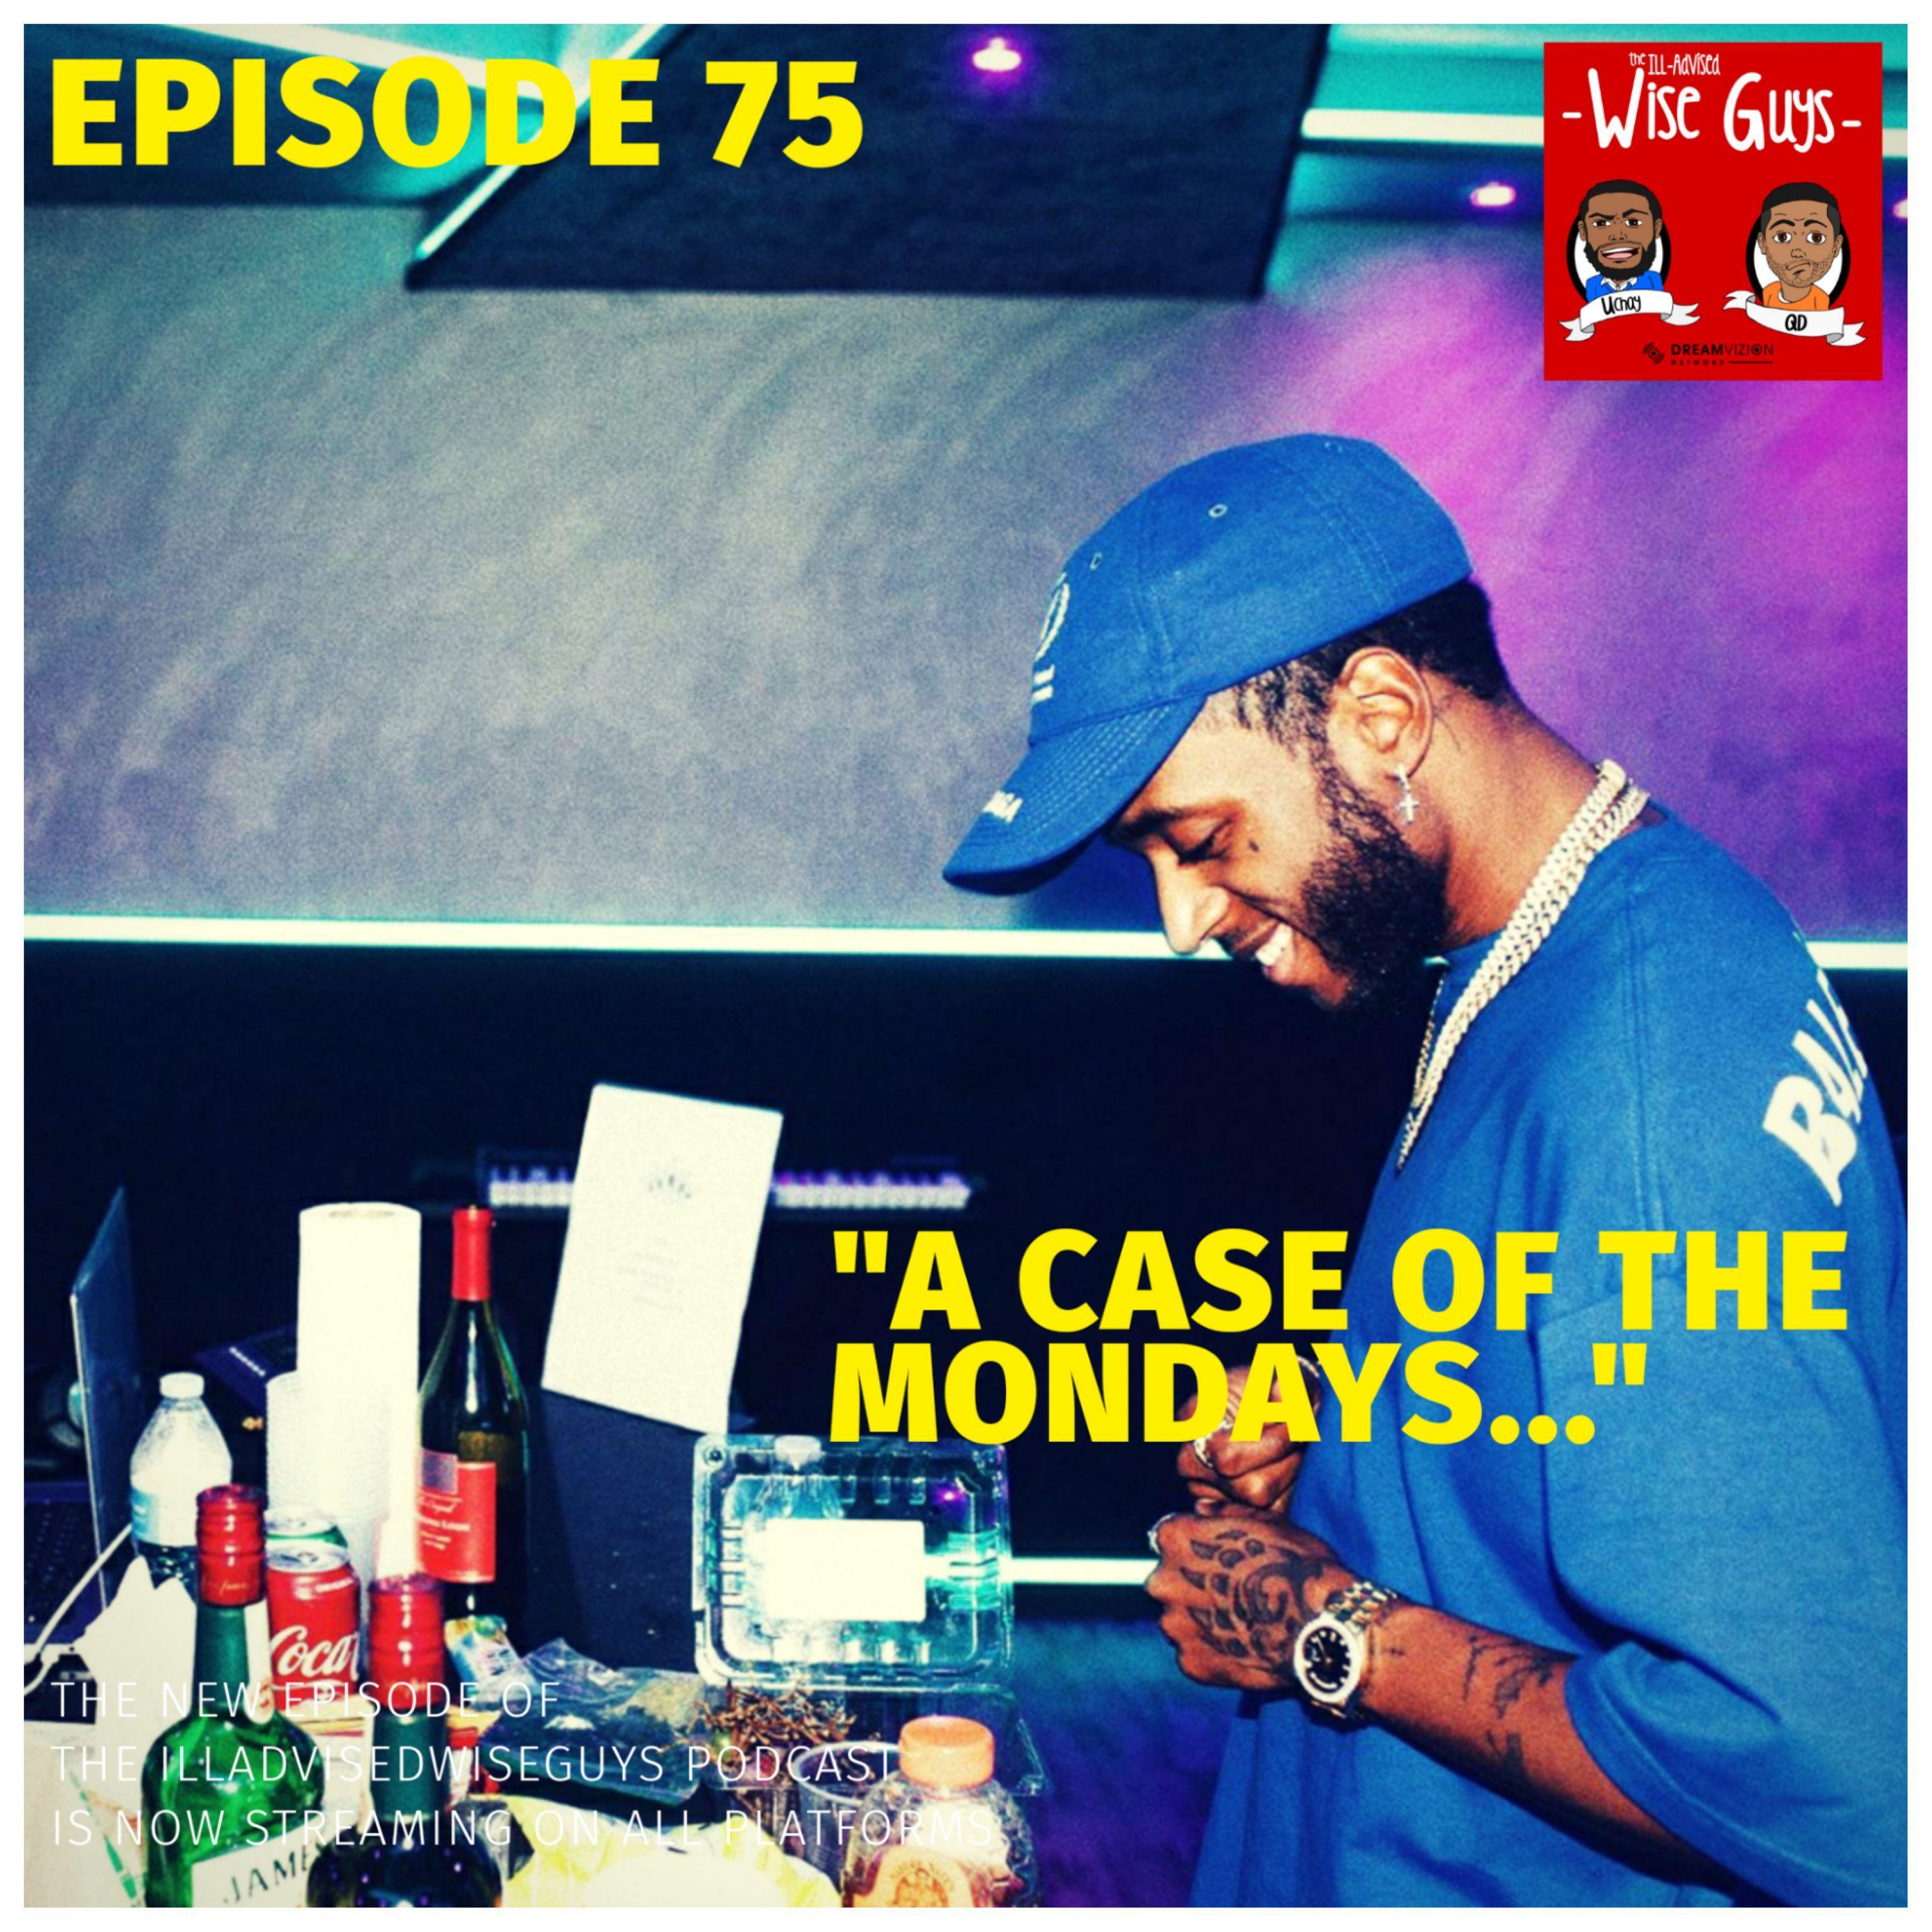 Episode 75 - "A Case of the Mondays..." Image